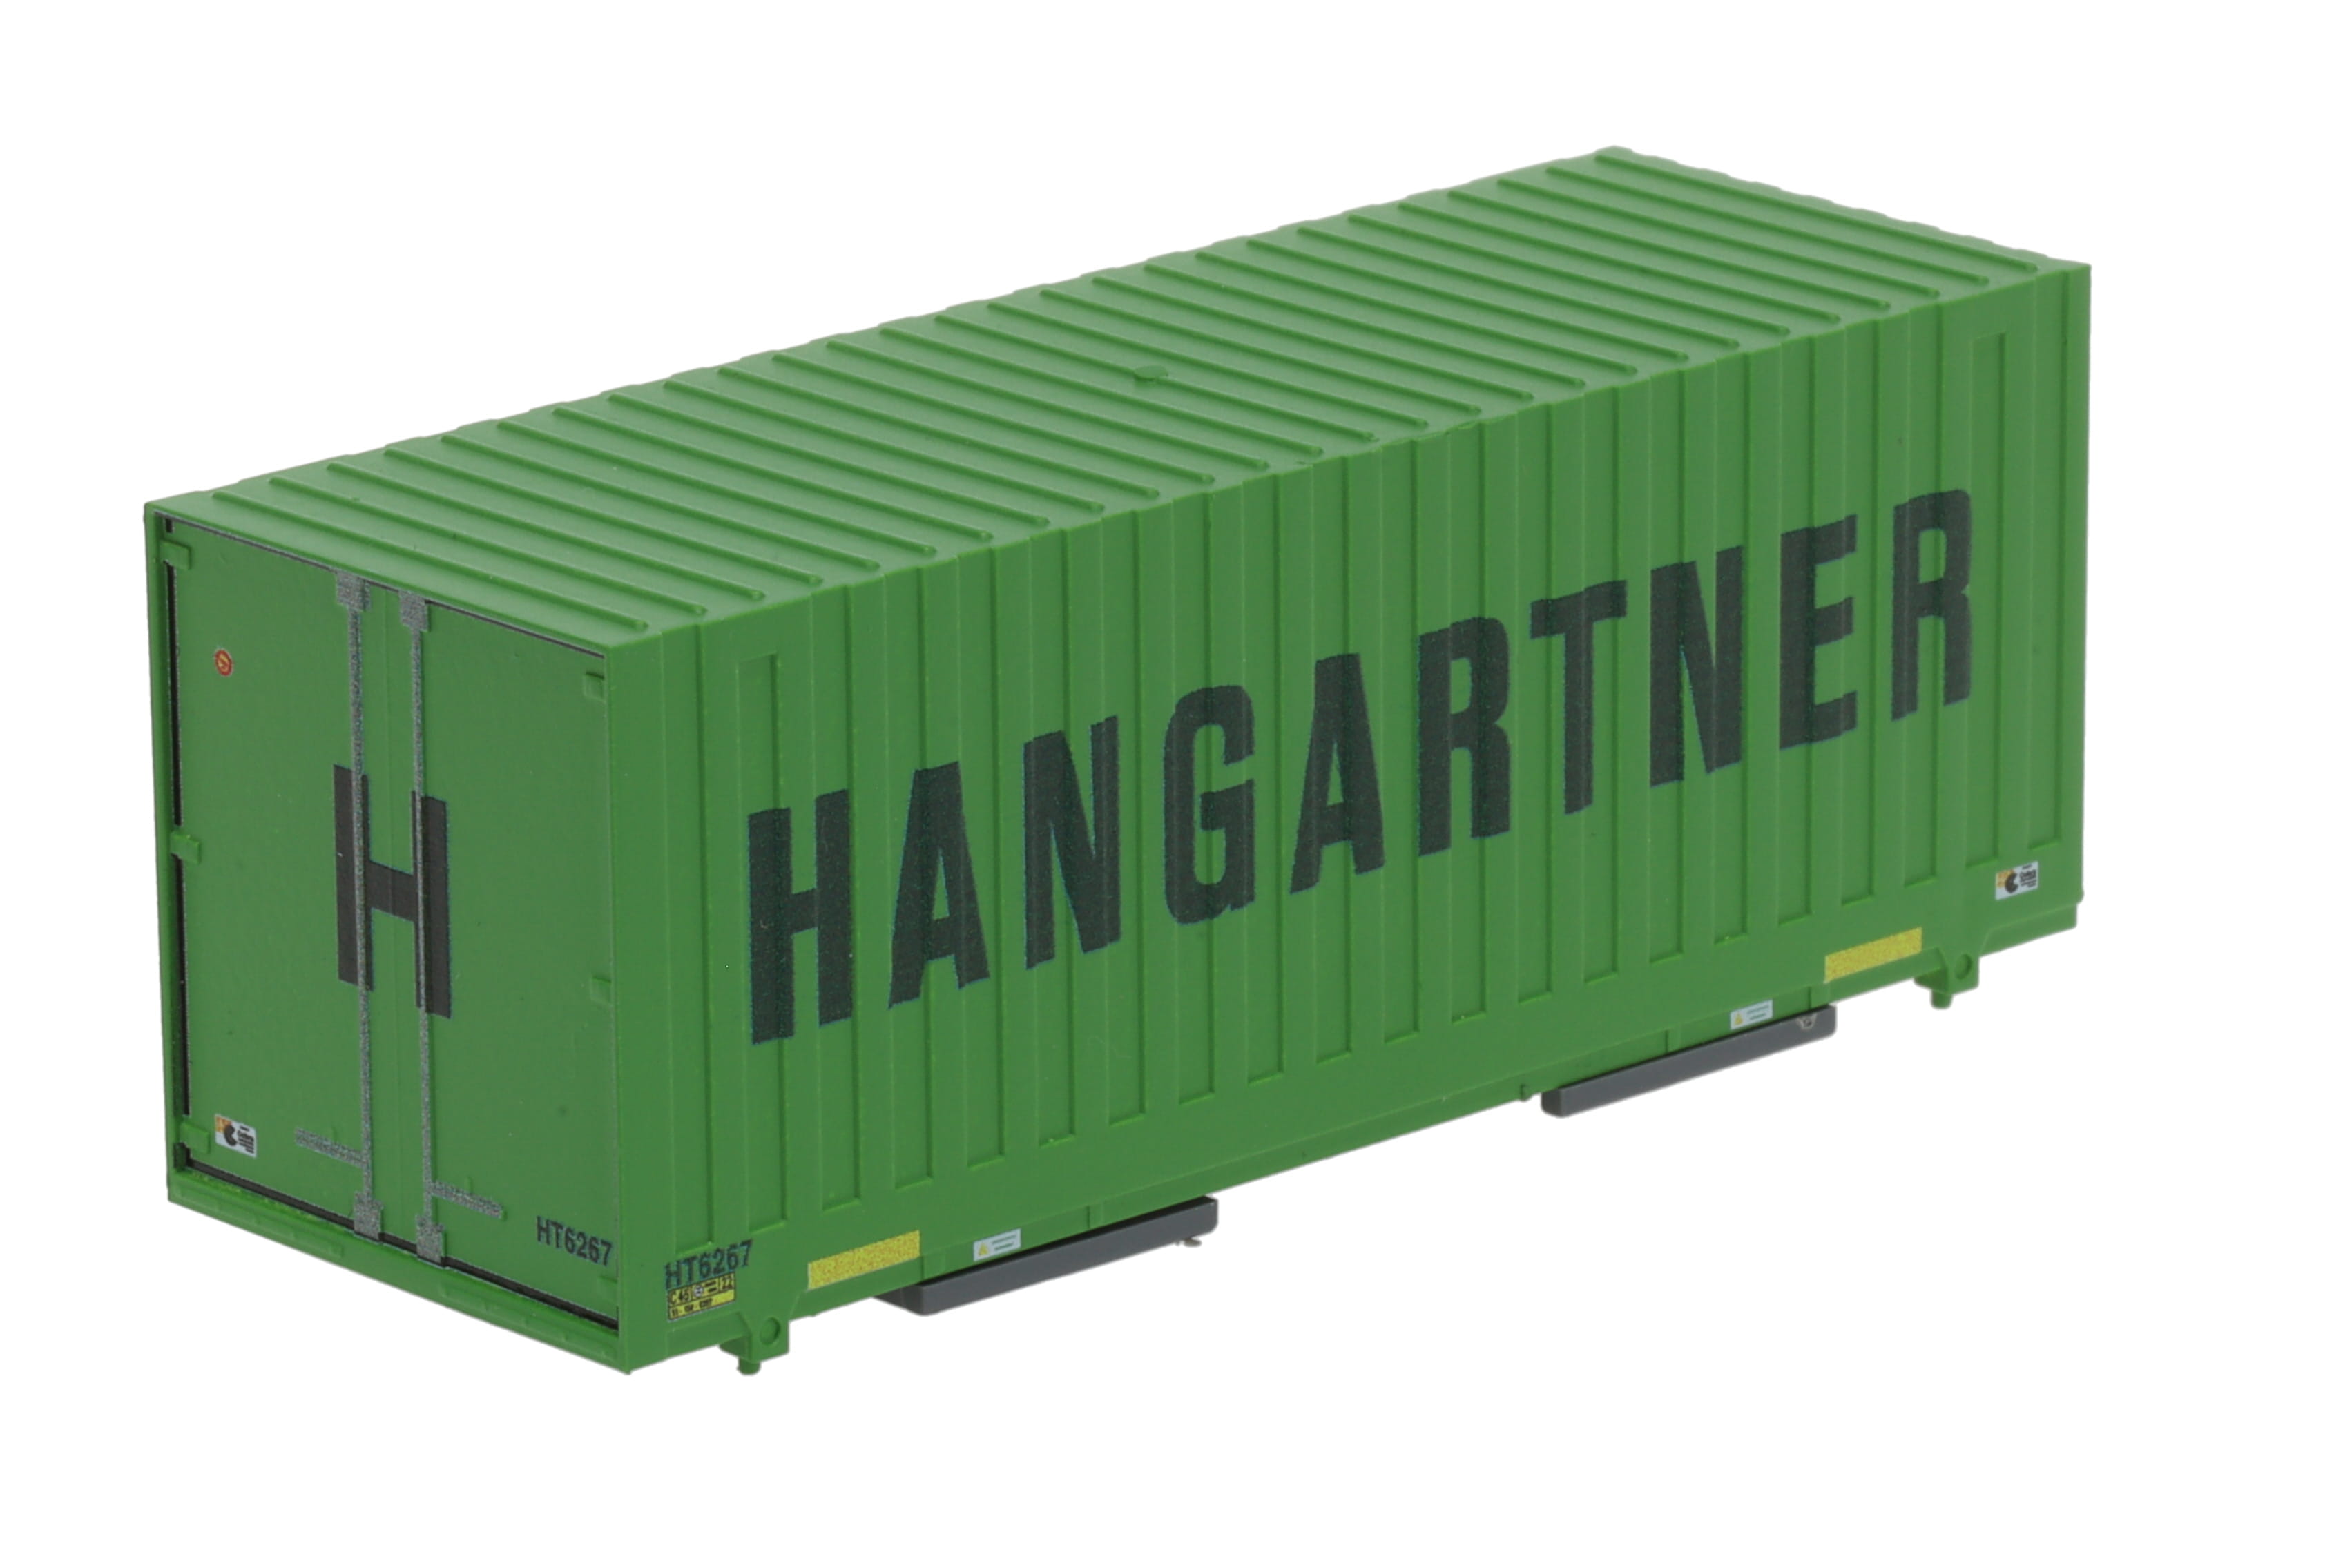 1:87 Container WB-C715 HANGAR Wechselbehälter WB-C 715 Cobra Spu-Wa Box, Aufschrift: HANGARTNER, Behälter-Nr: HT 6267